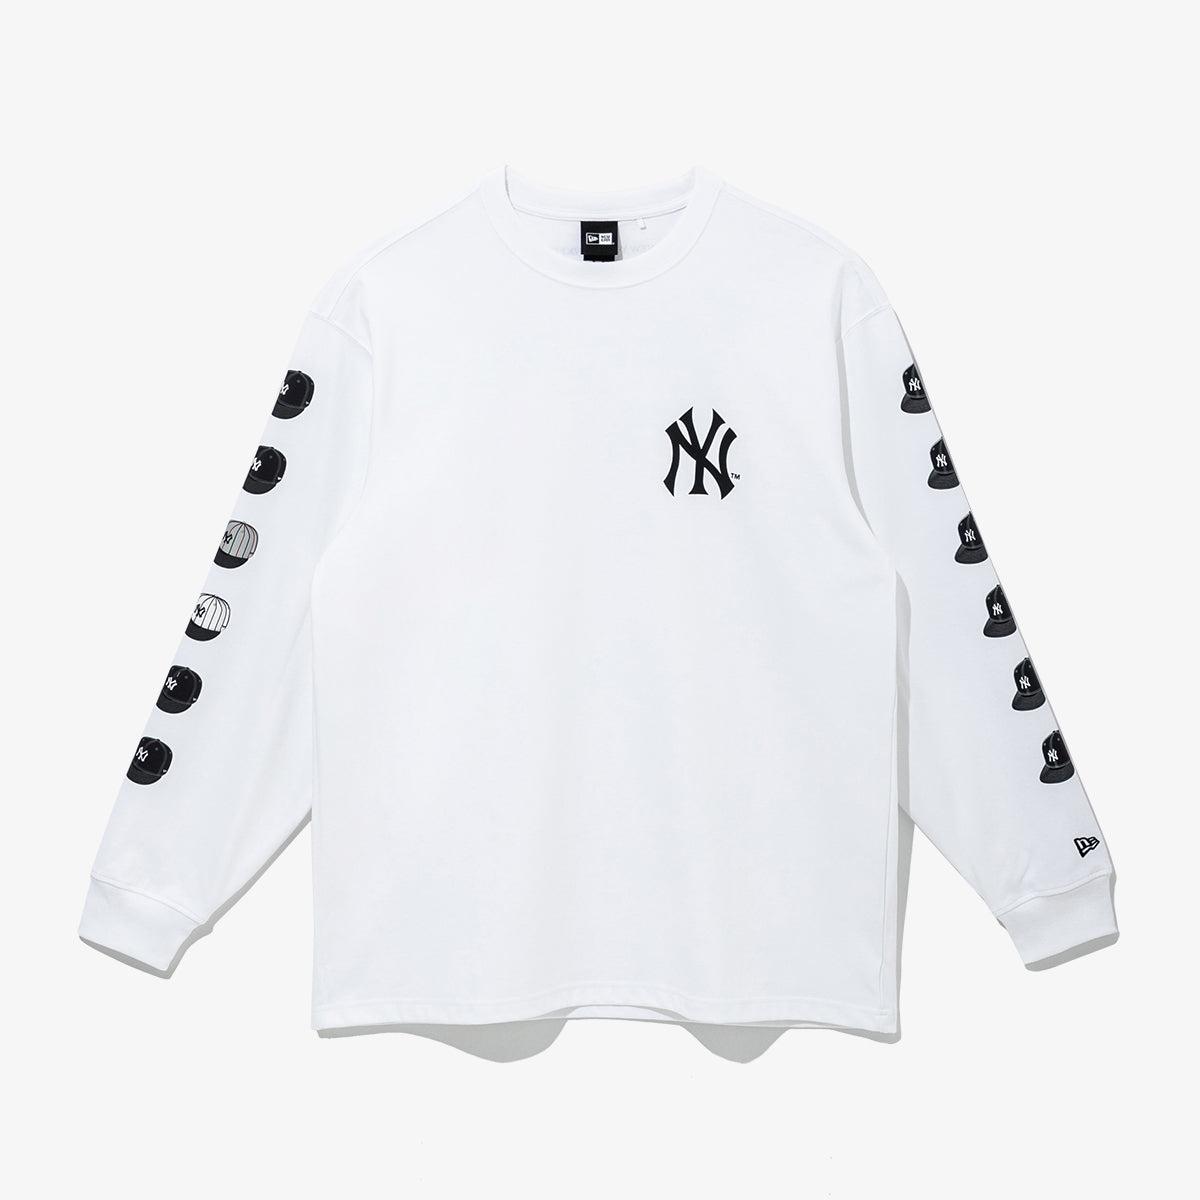 Majestic New York Yankees Jersey Evolution Tshirt Adult Size Large Men